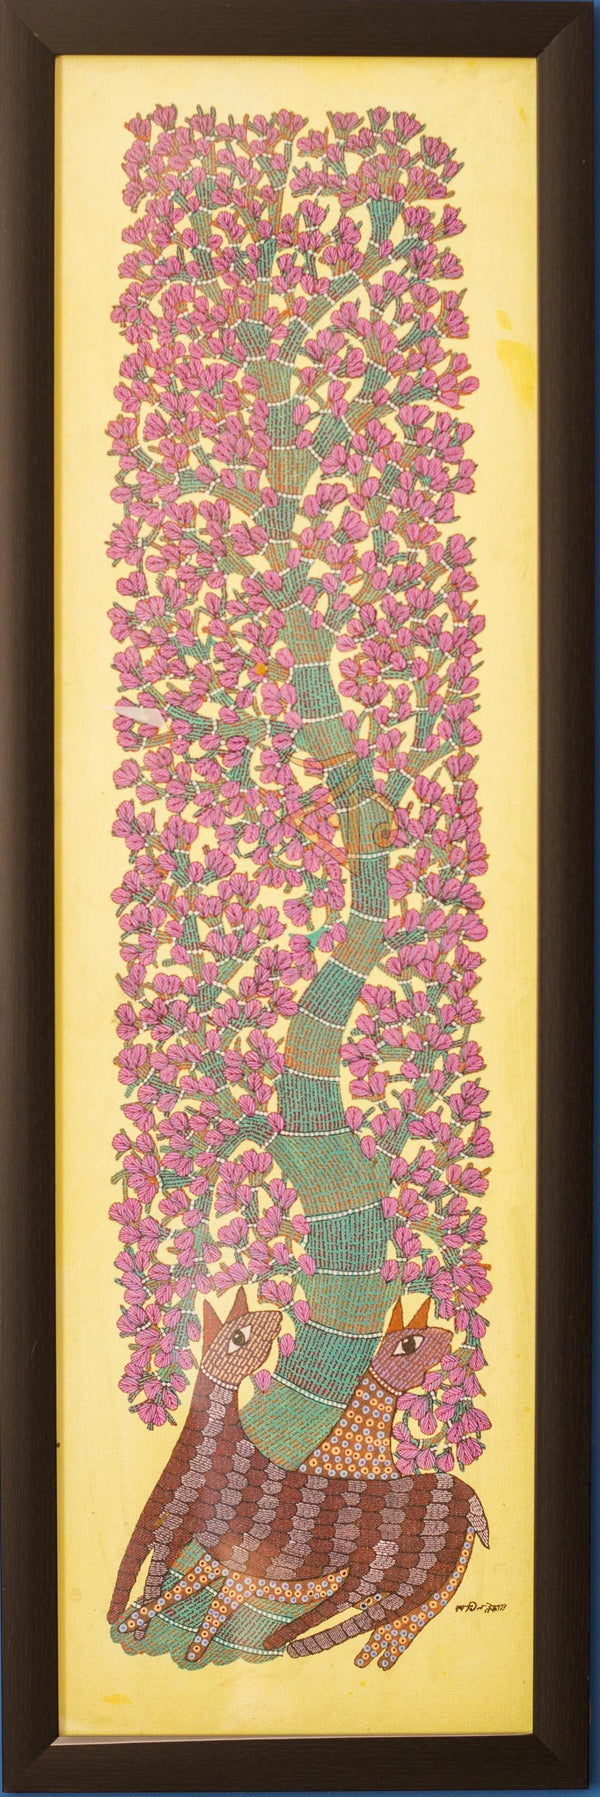 Folk Art gond traditional art titled 'Deer under tree Gond Art', 36x11 inches, by artist Kalavithi Art Ventures on Canvas